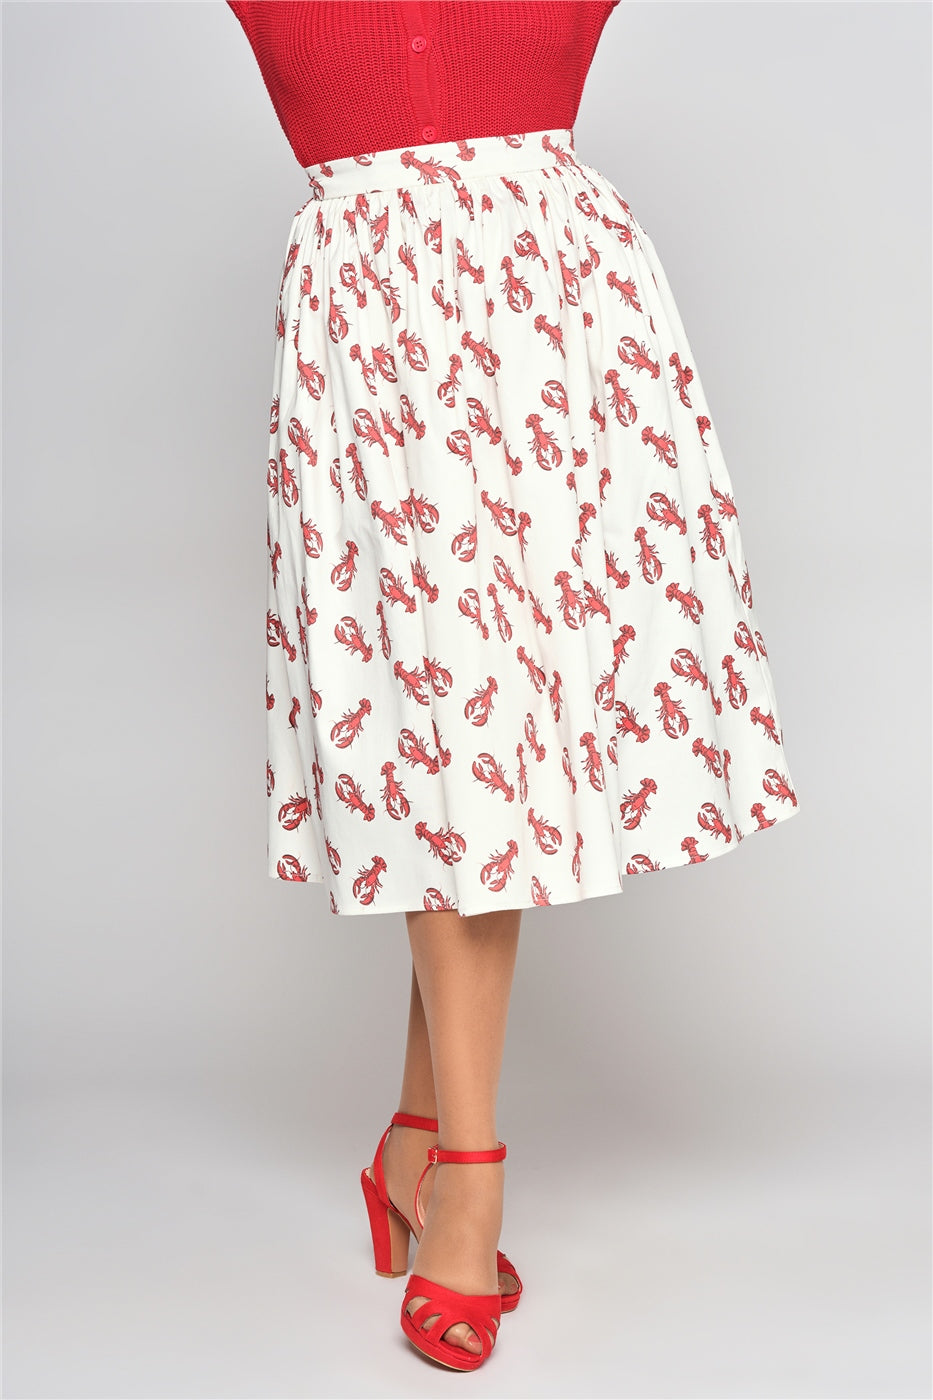 Jasmine Rock Lobster Swing Skirt by Collectif